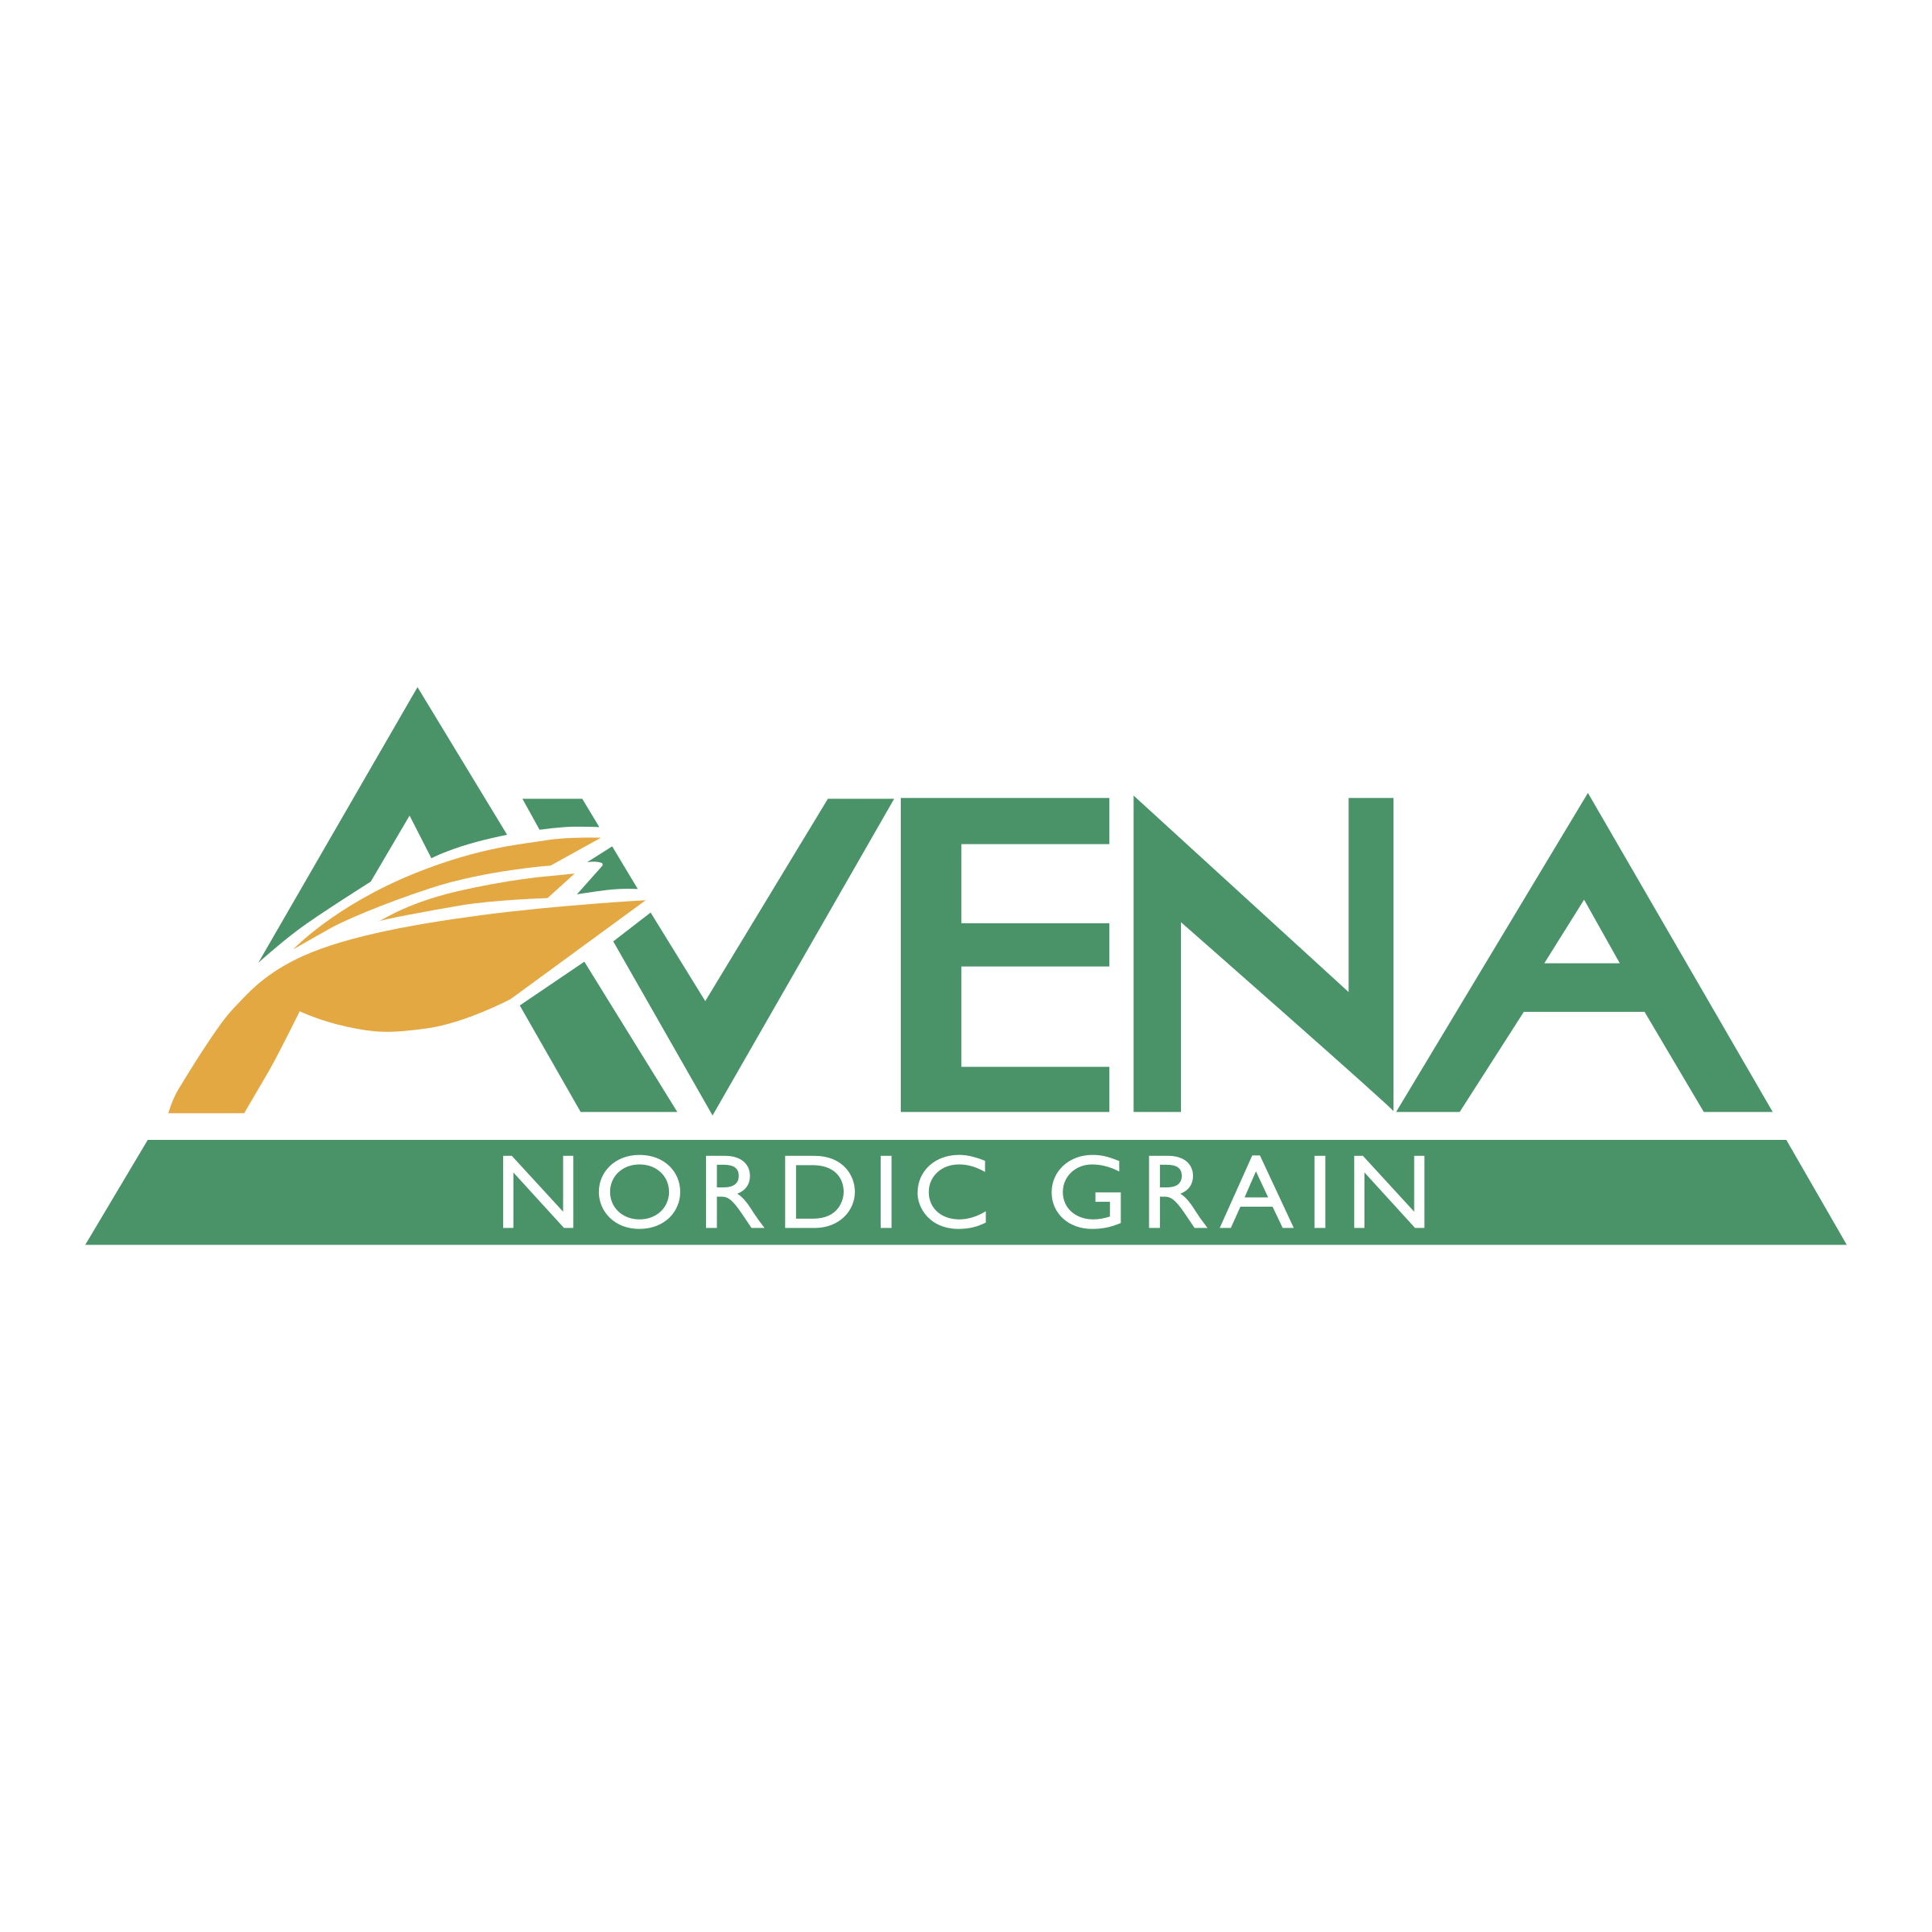 Grain Logo - Avena Nordic Grain Logo PNG Transparent & SVG Vector - Freebie Supply